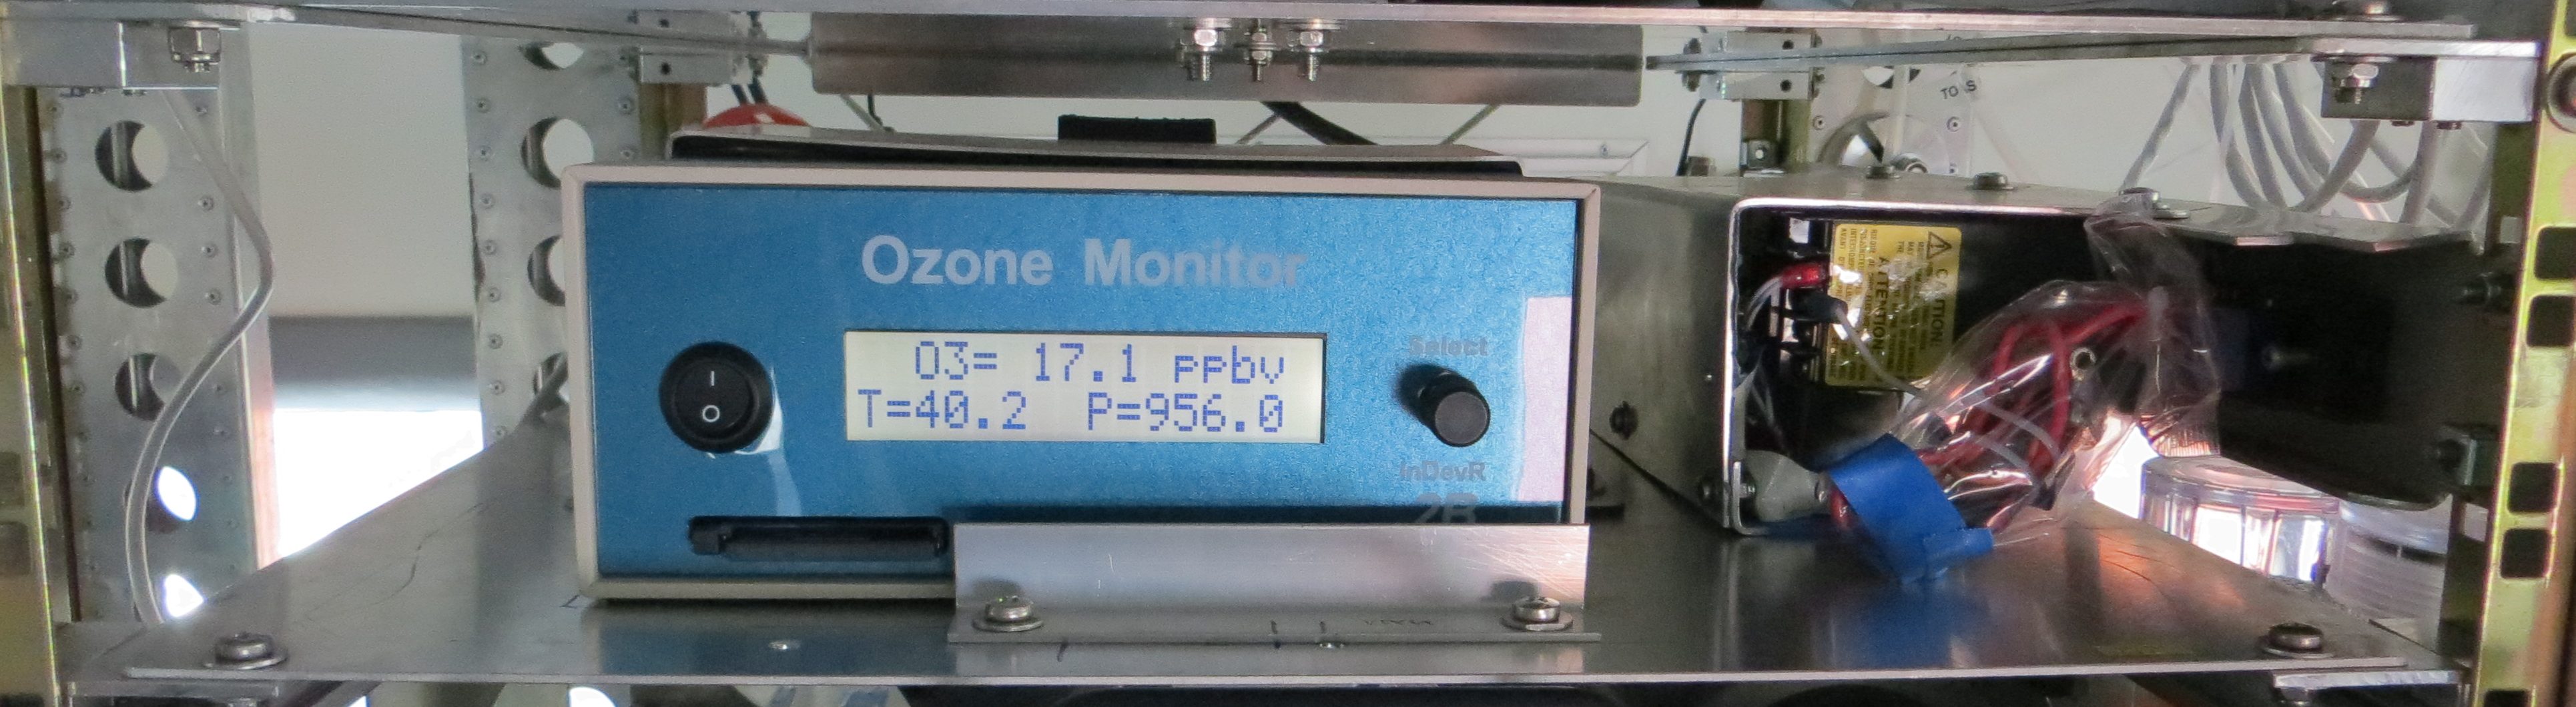 O3 monitor